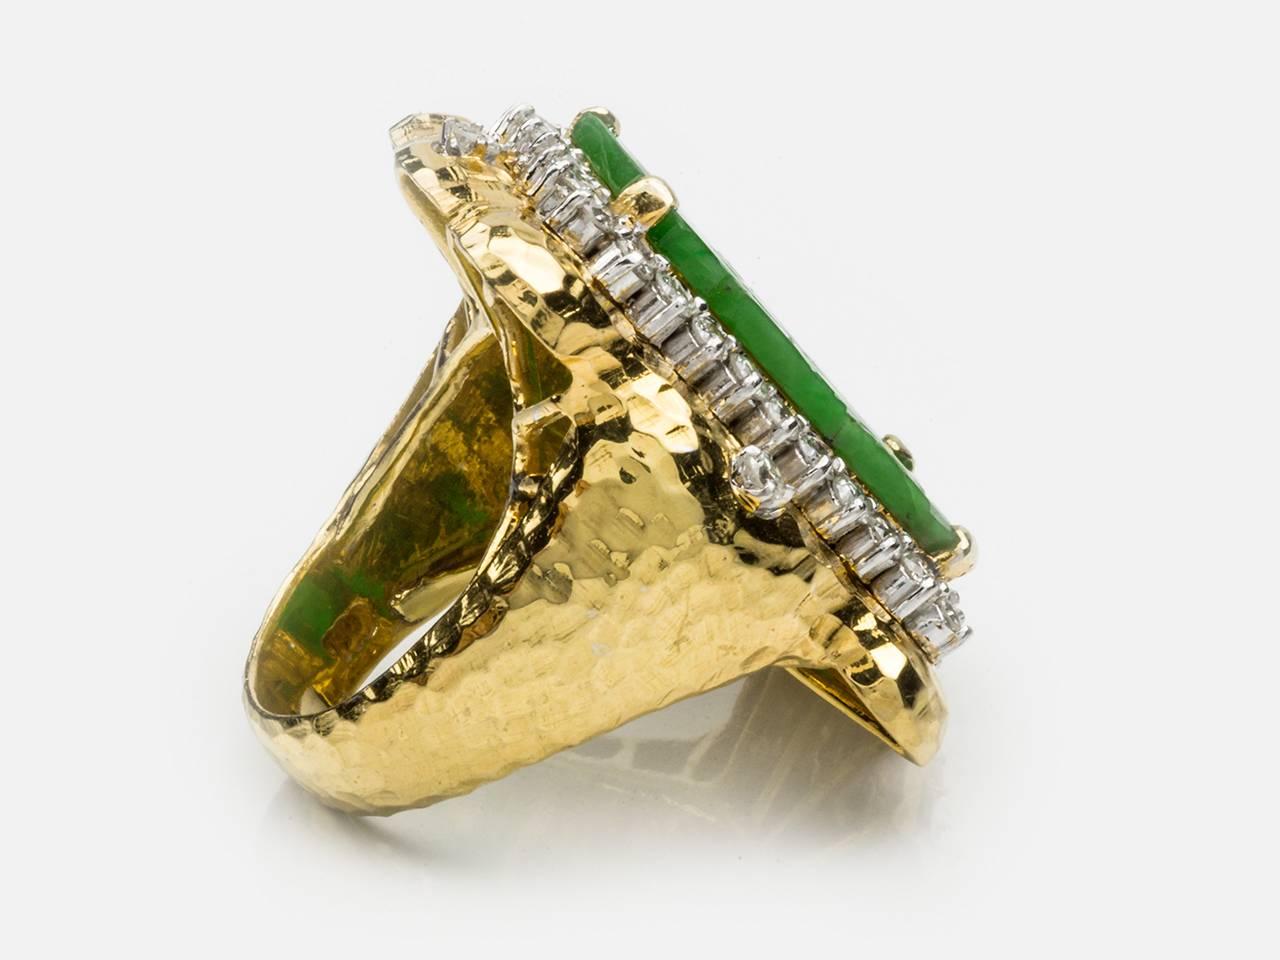 carved jade ring antique